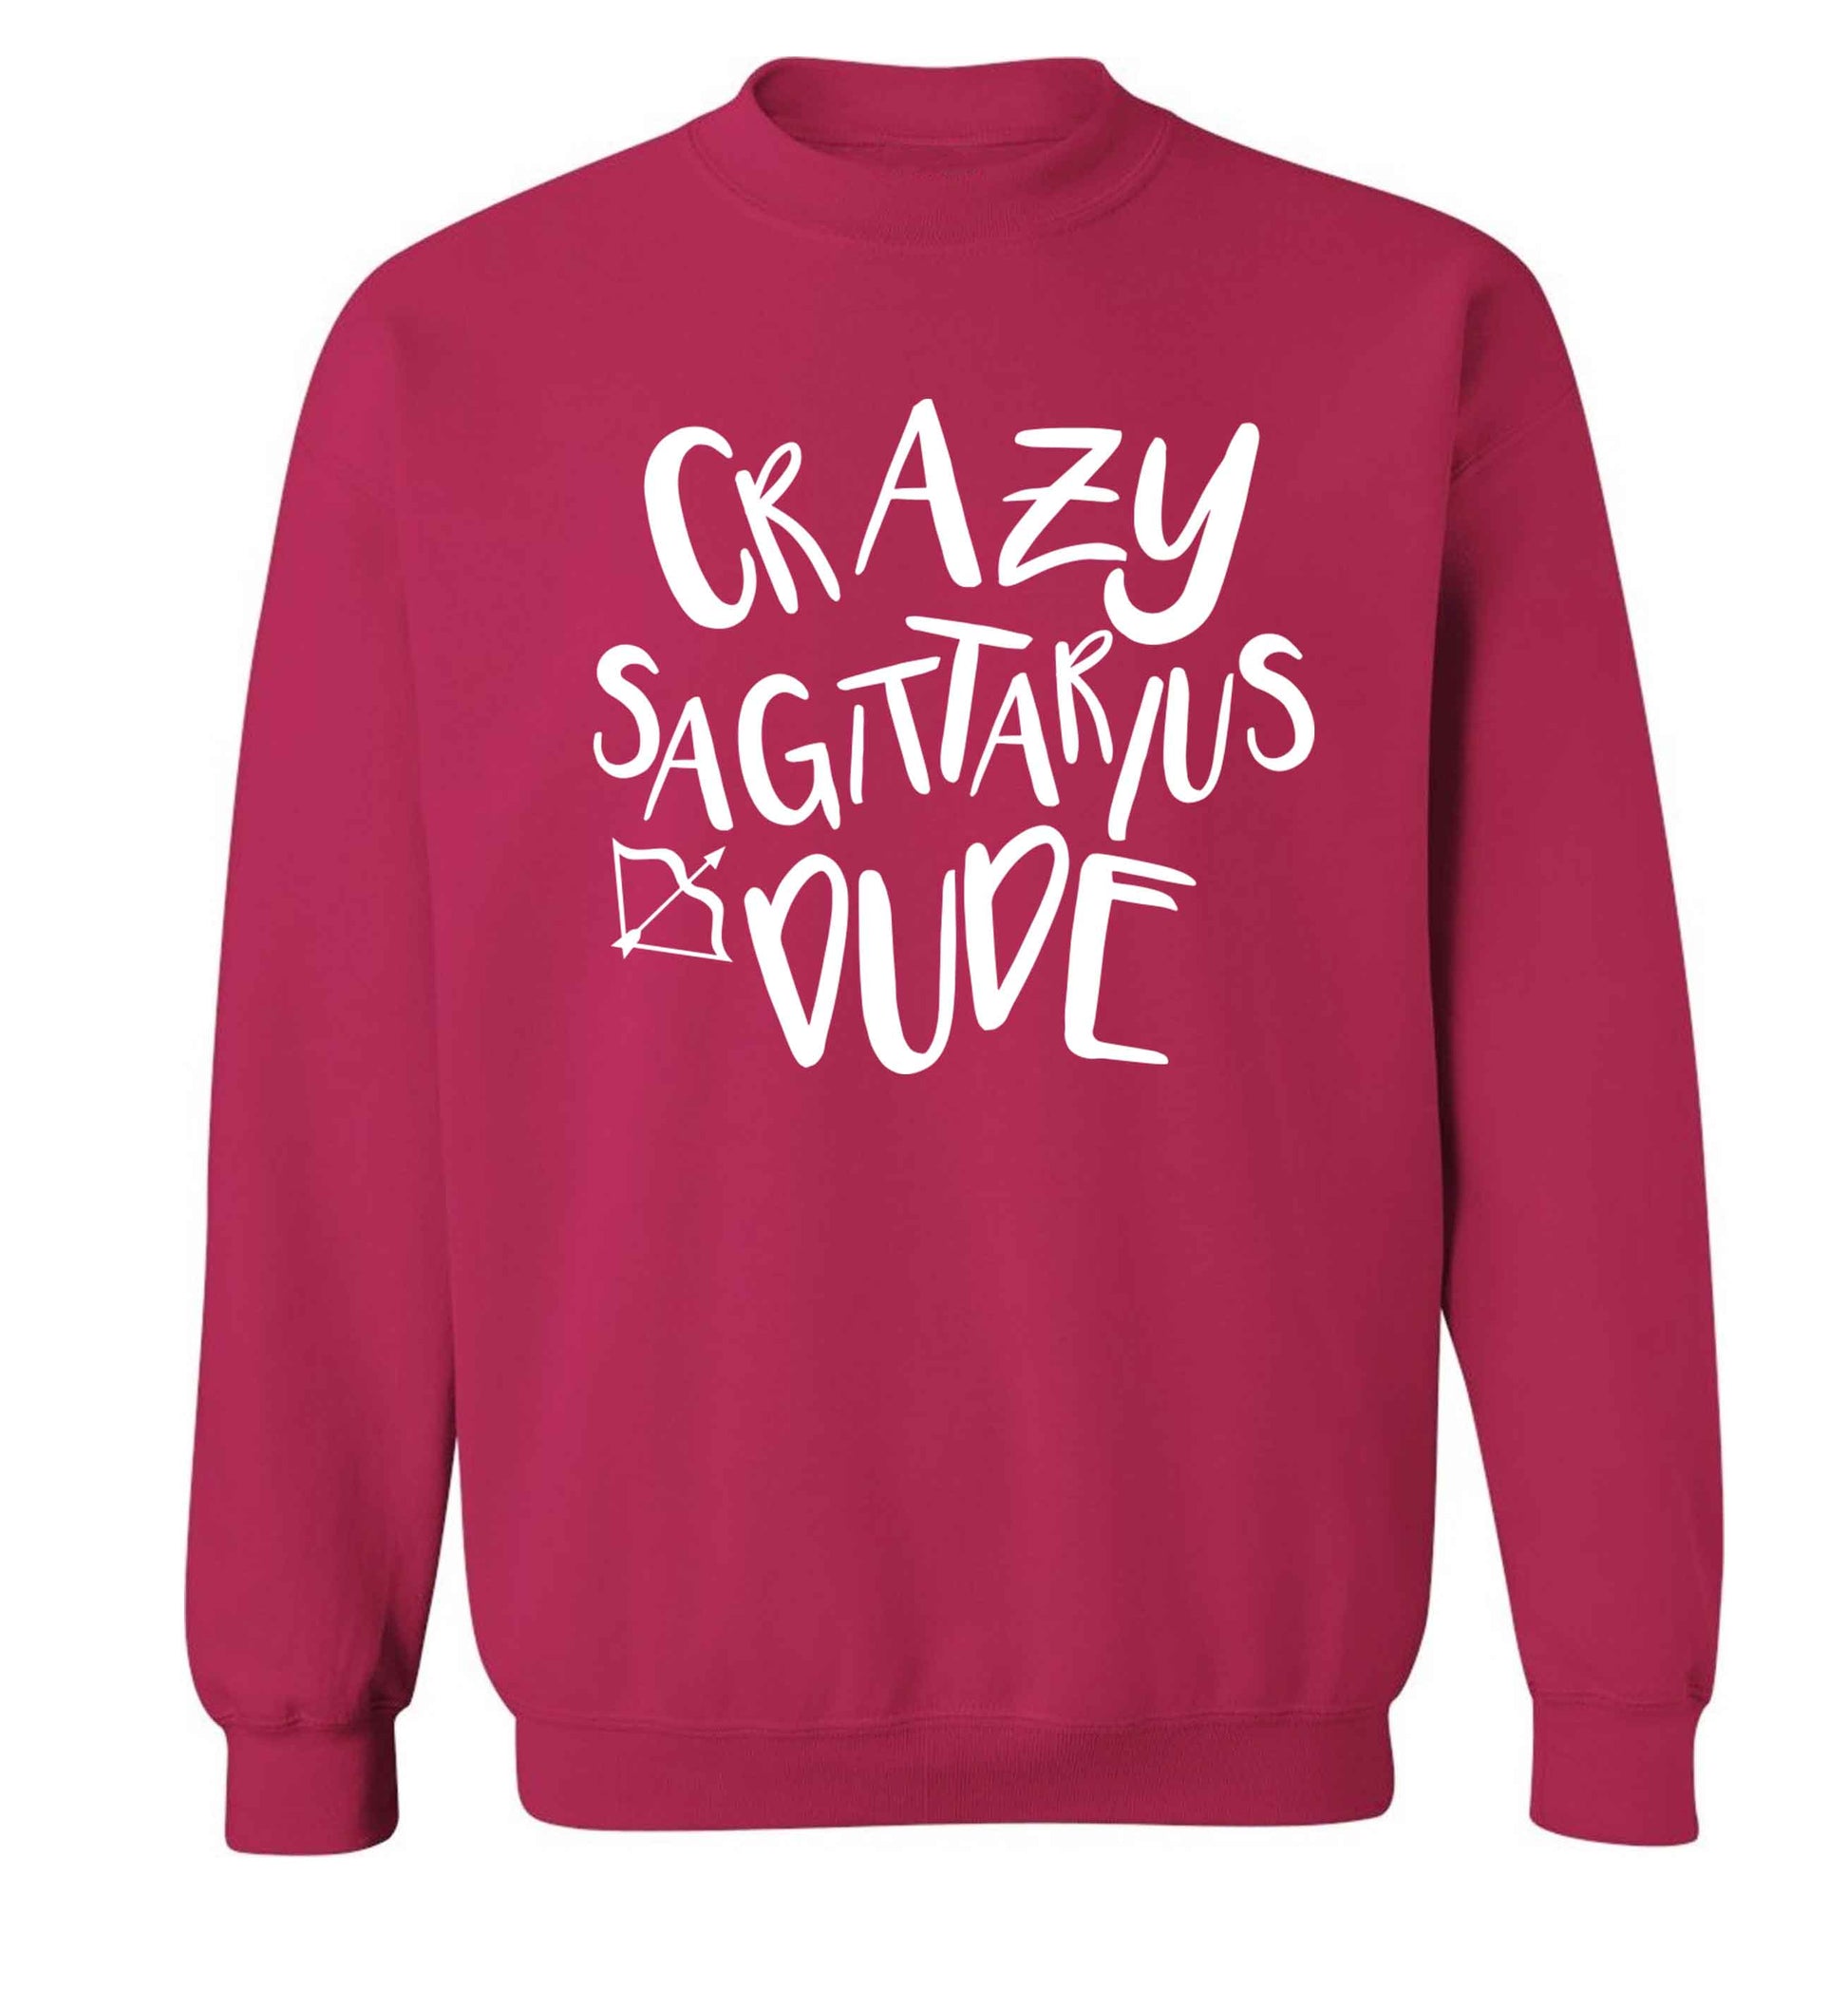 Crazy sagittarius dude Adult's unisex pink Sweater 2XL